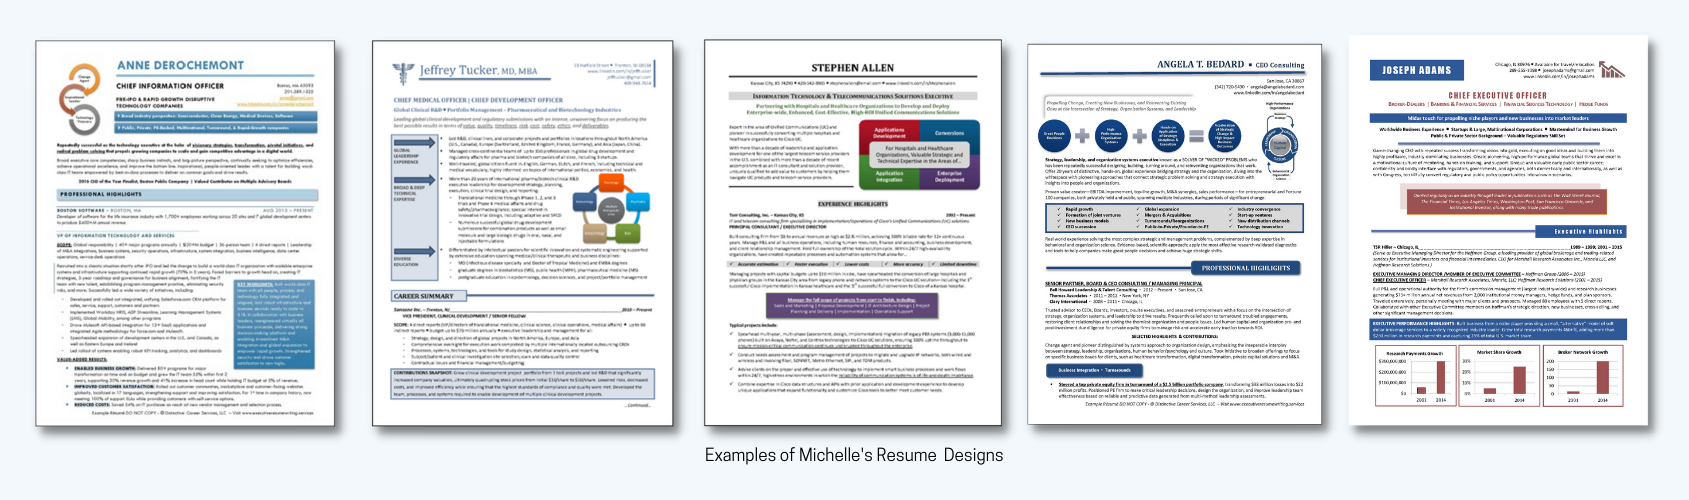 Resume Design Examples